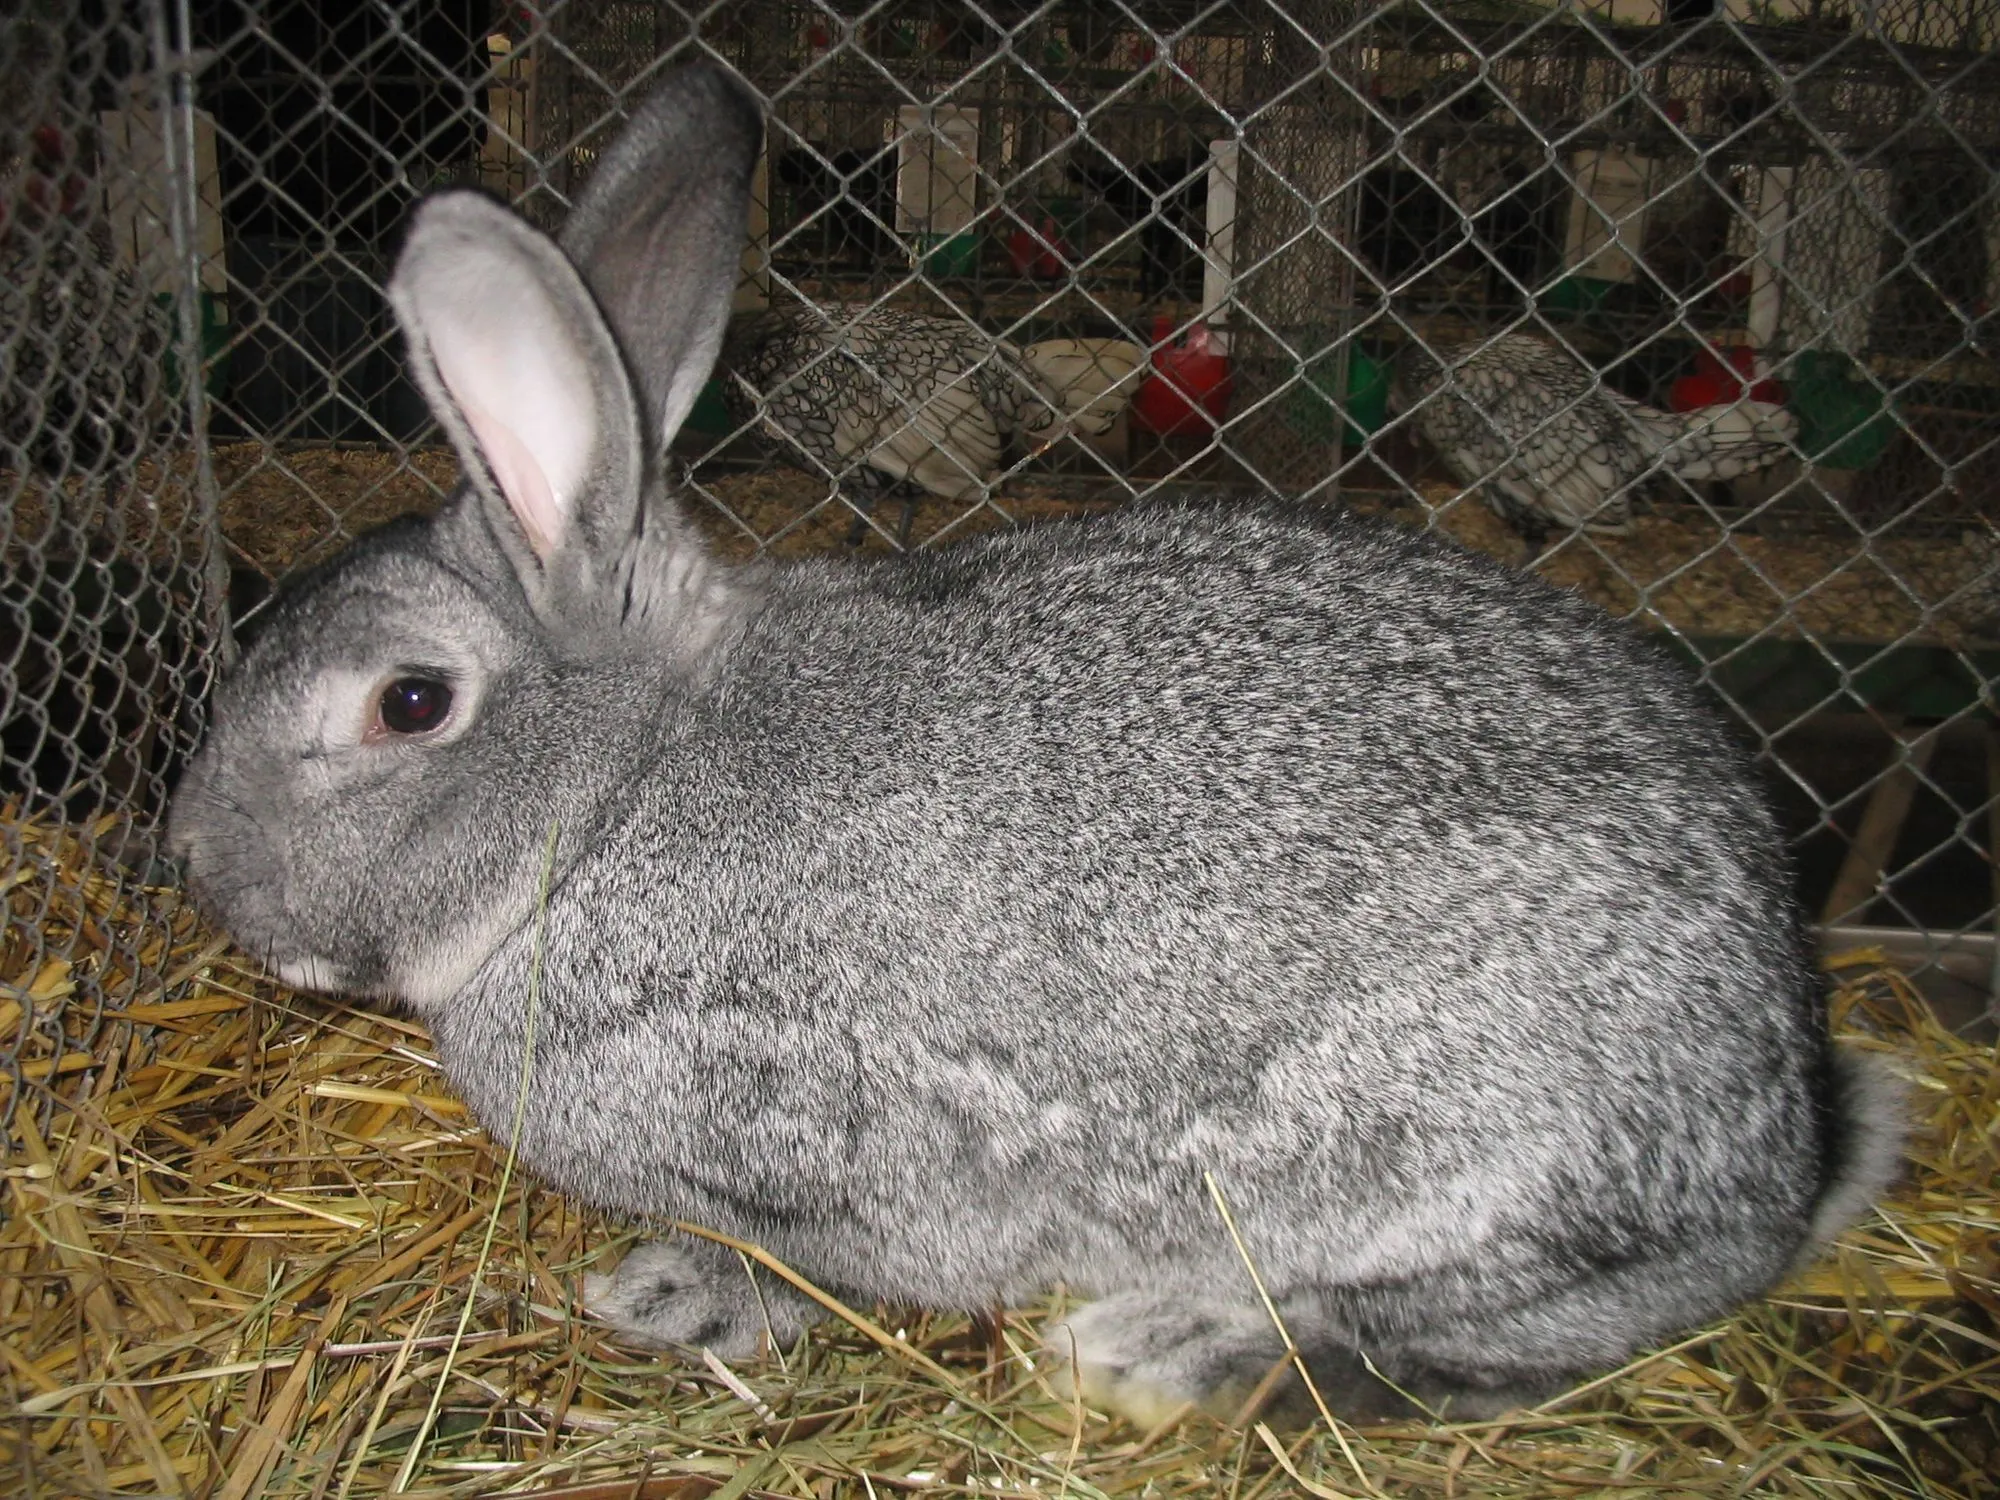 giant chinchilla rabbit vs flemish giant